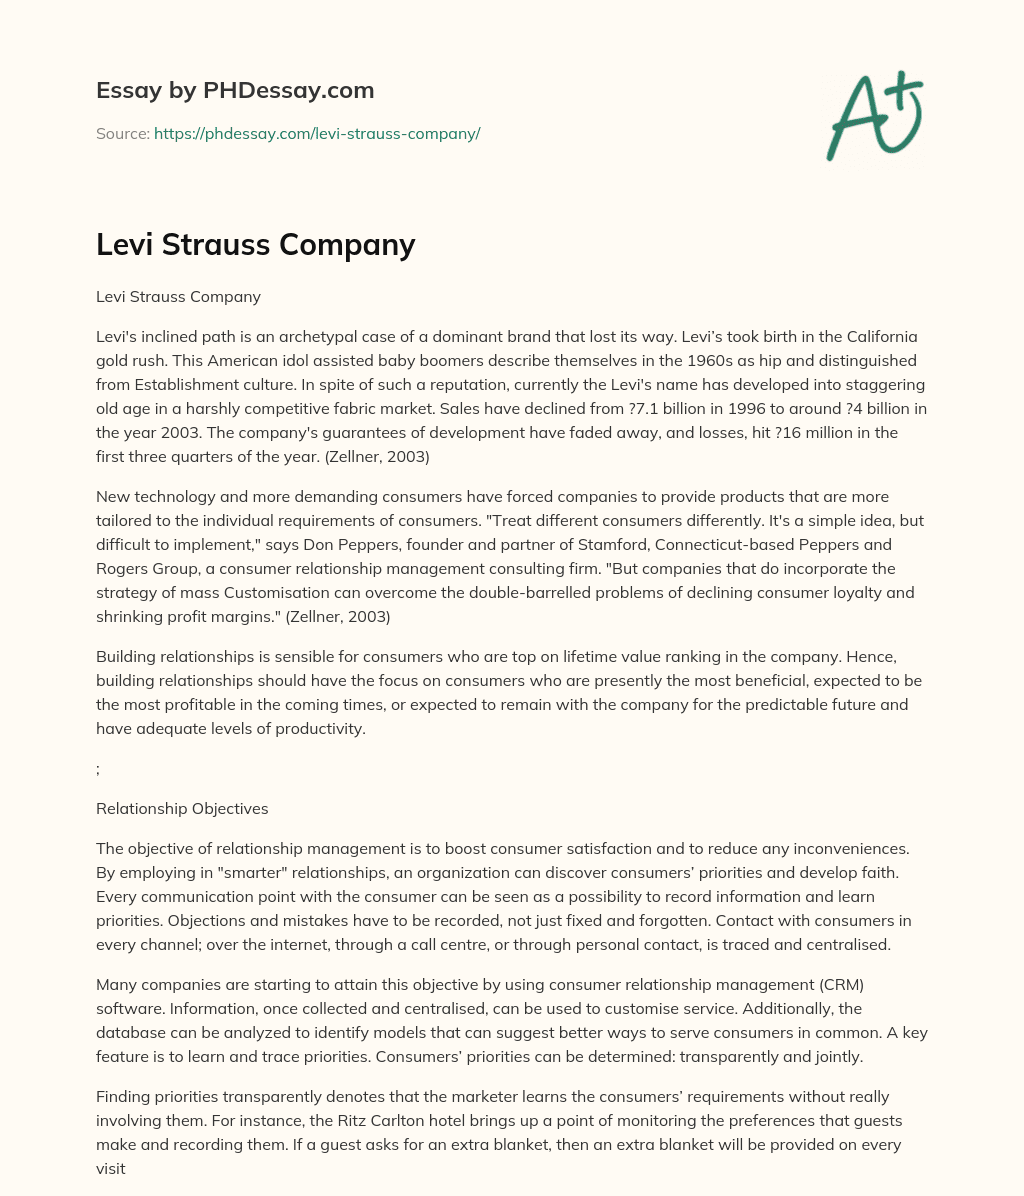 Levi Strauss Company essay